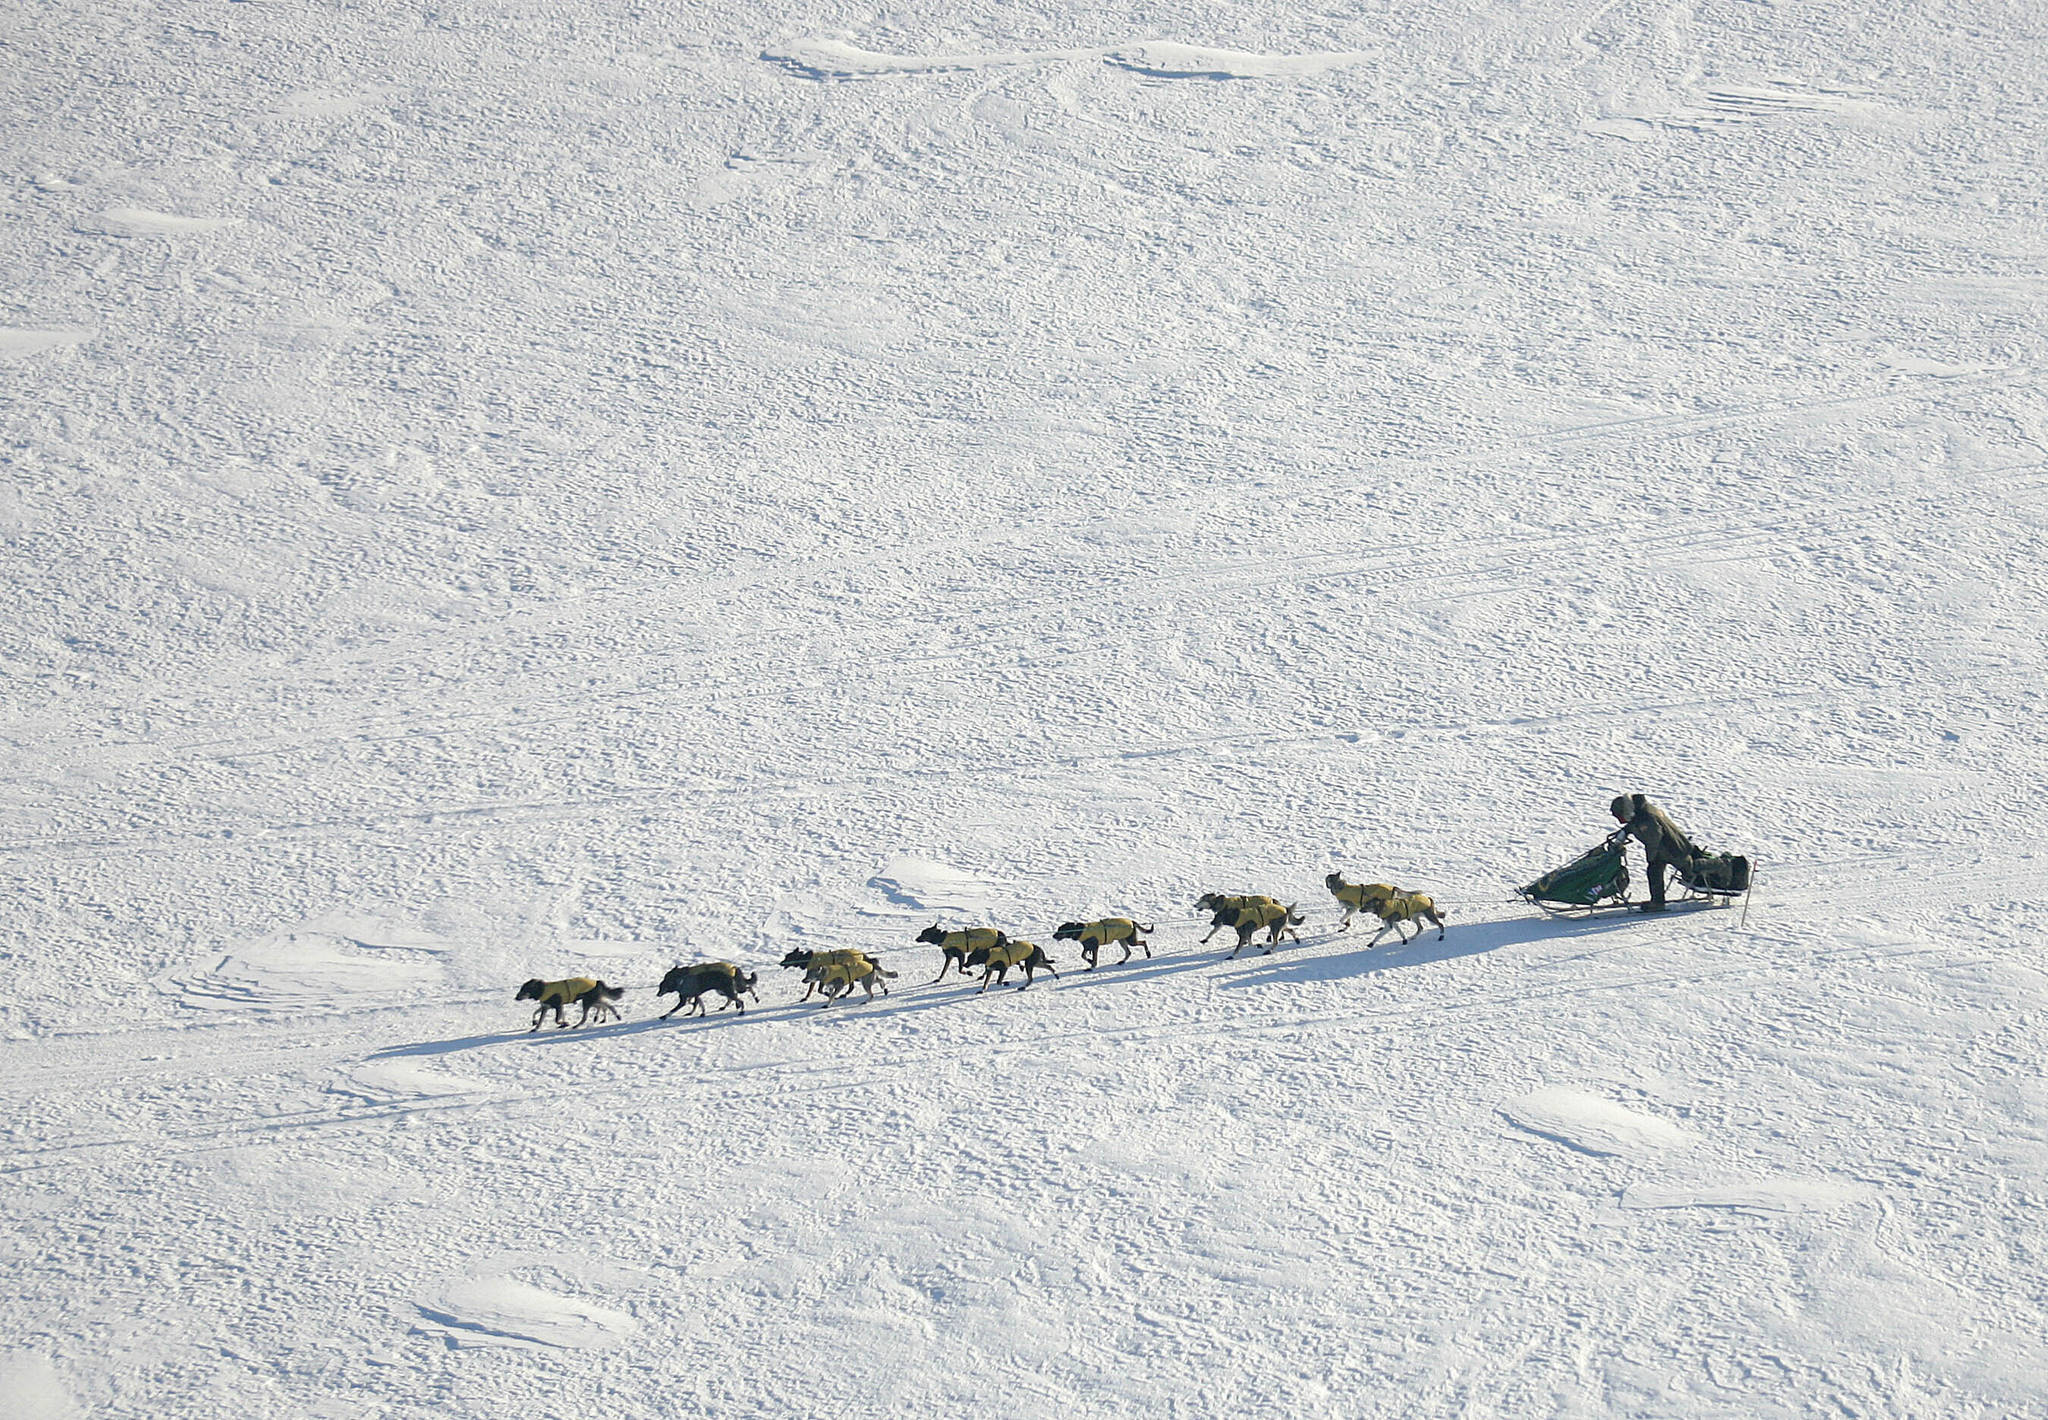 Iditarod kicks off